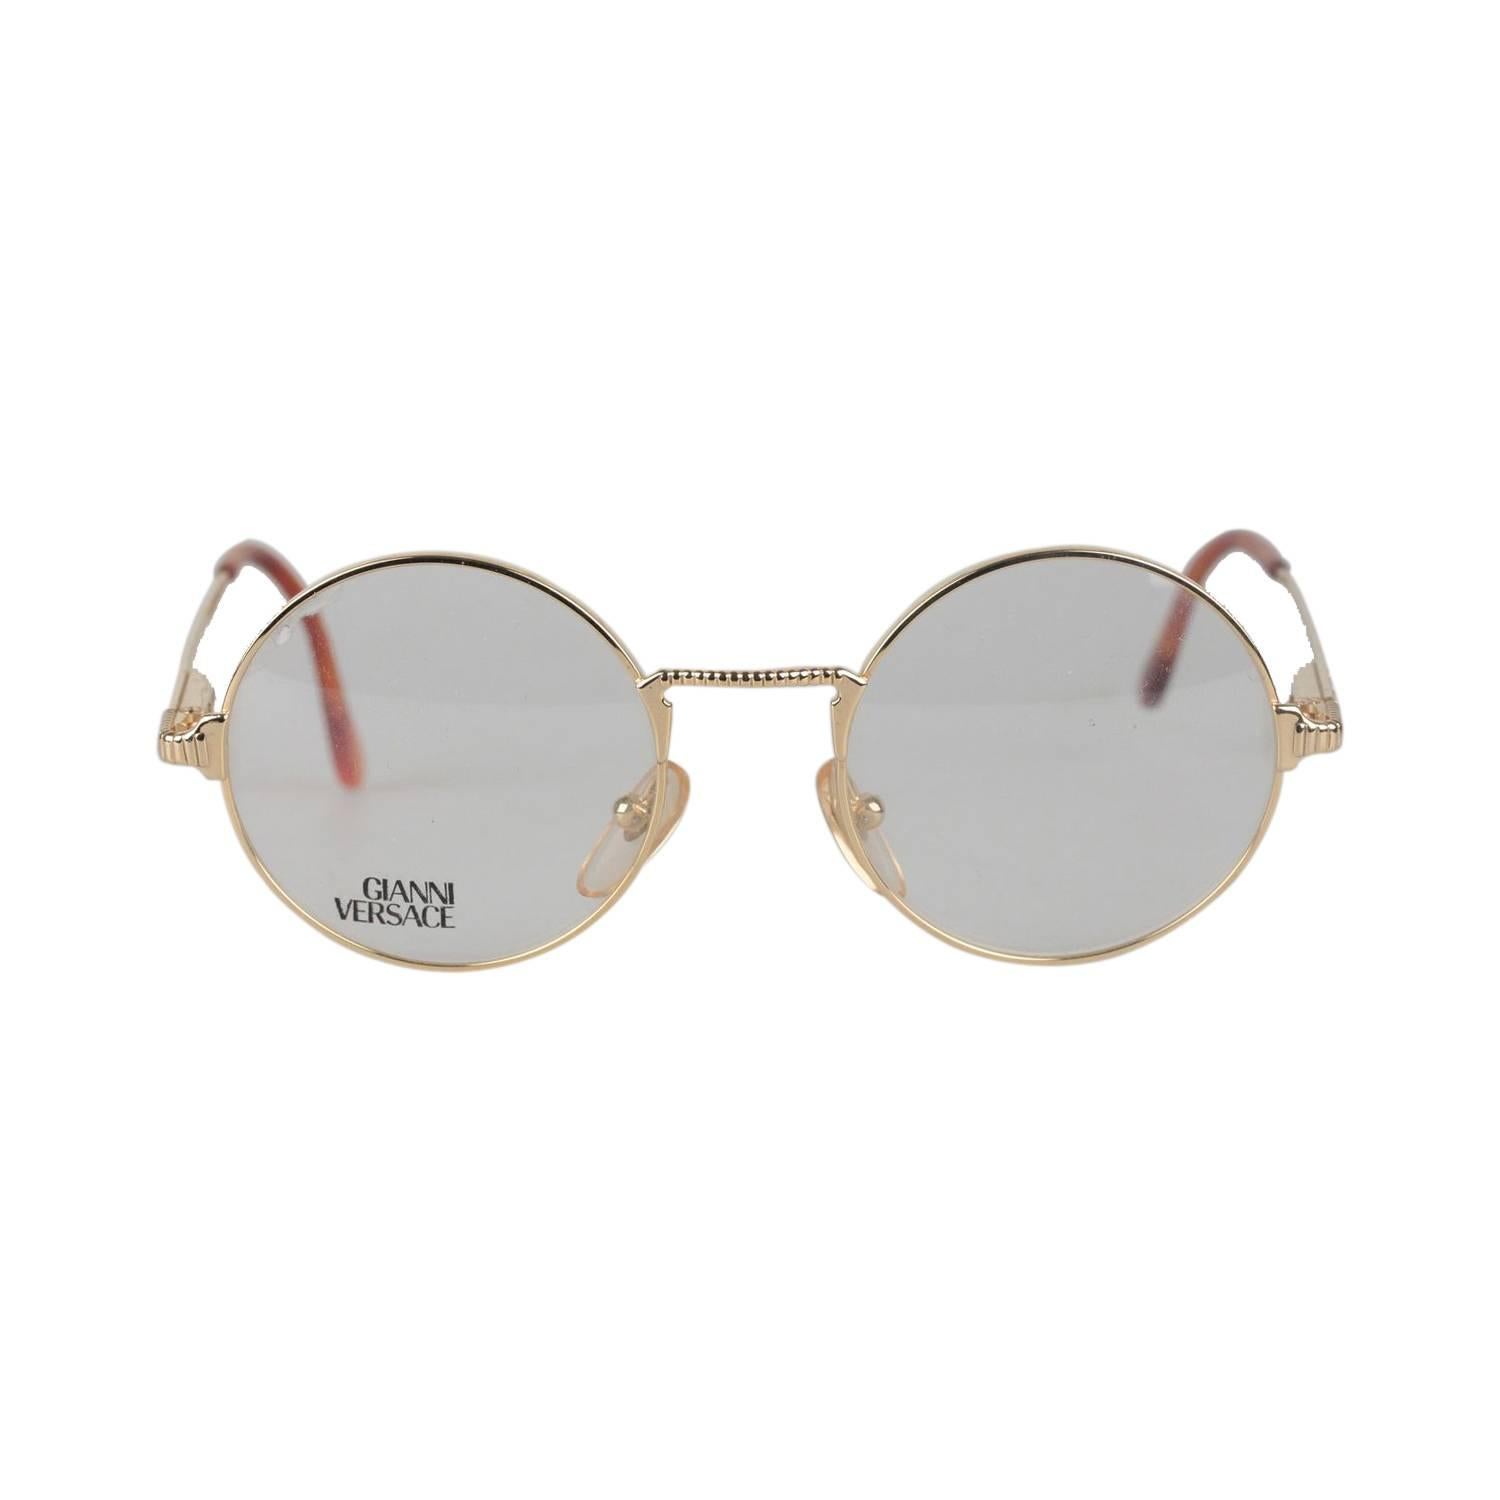 Gianni Versace Vintage Gold Metal Round Frame Mod 540 Eyeglasses NOS